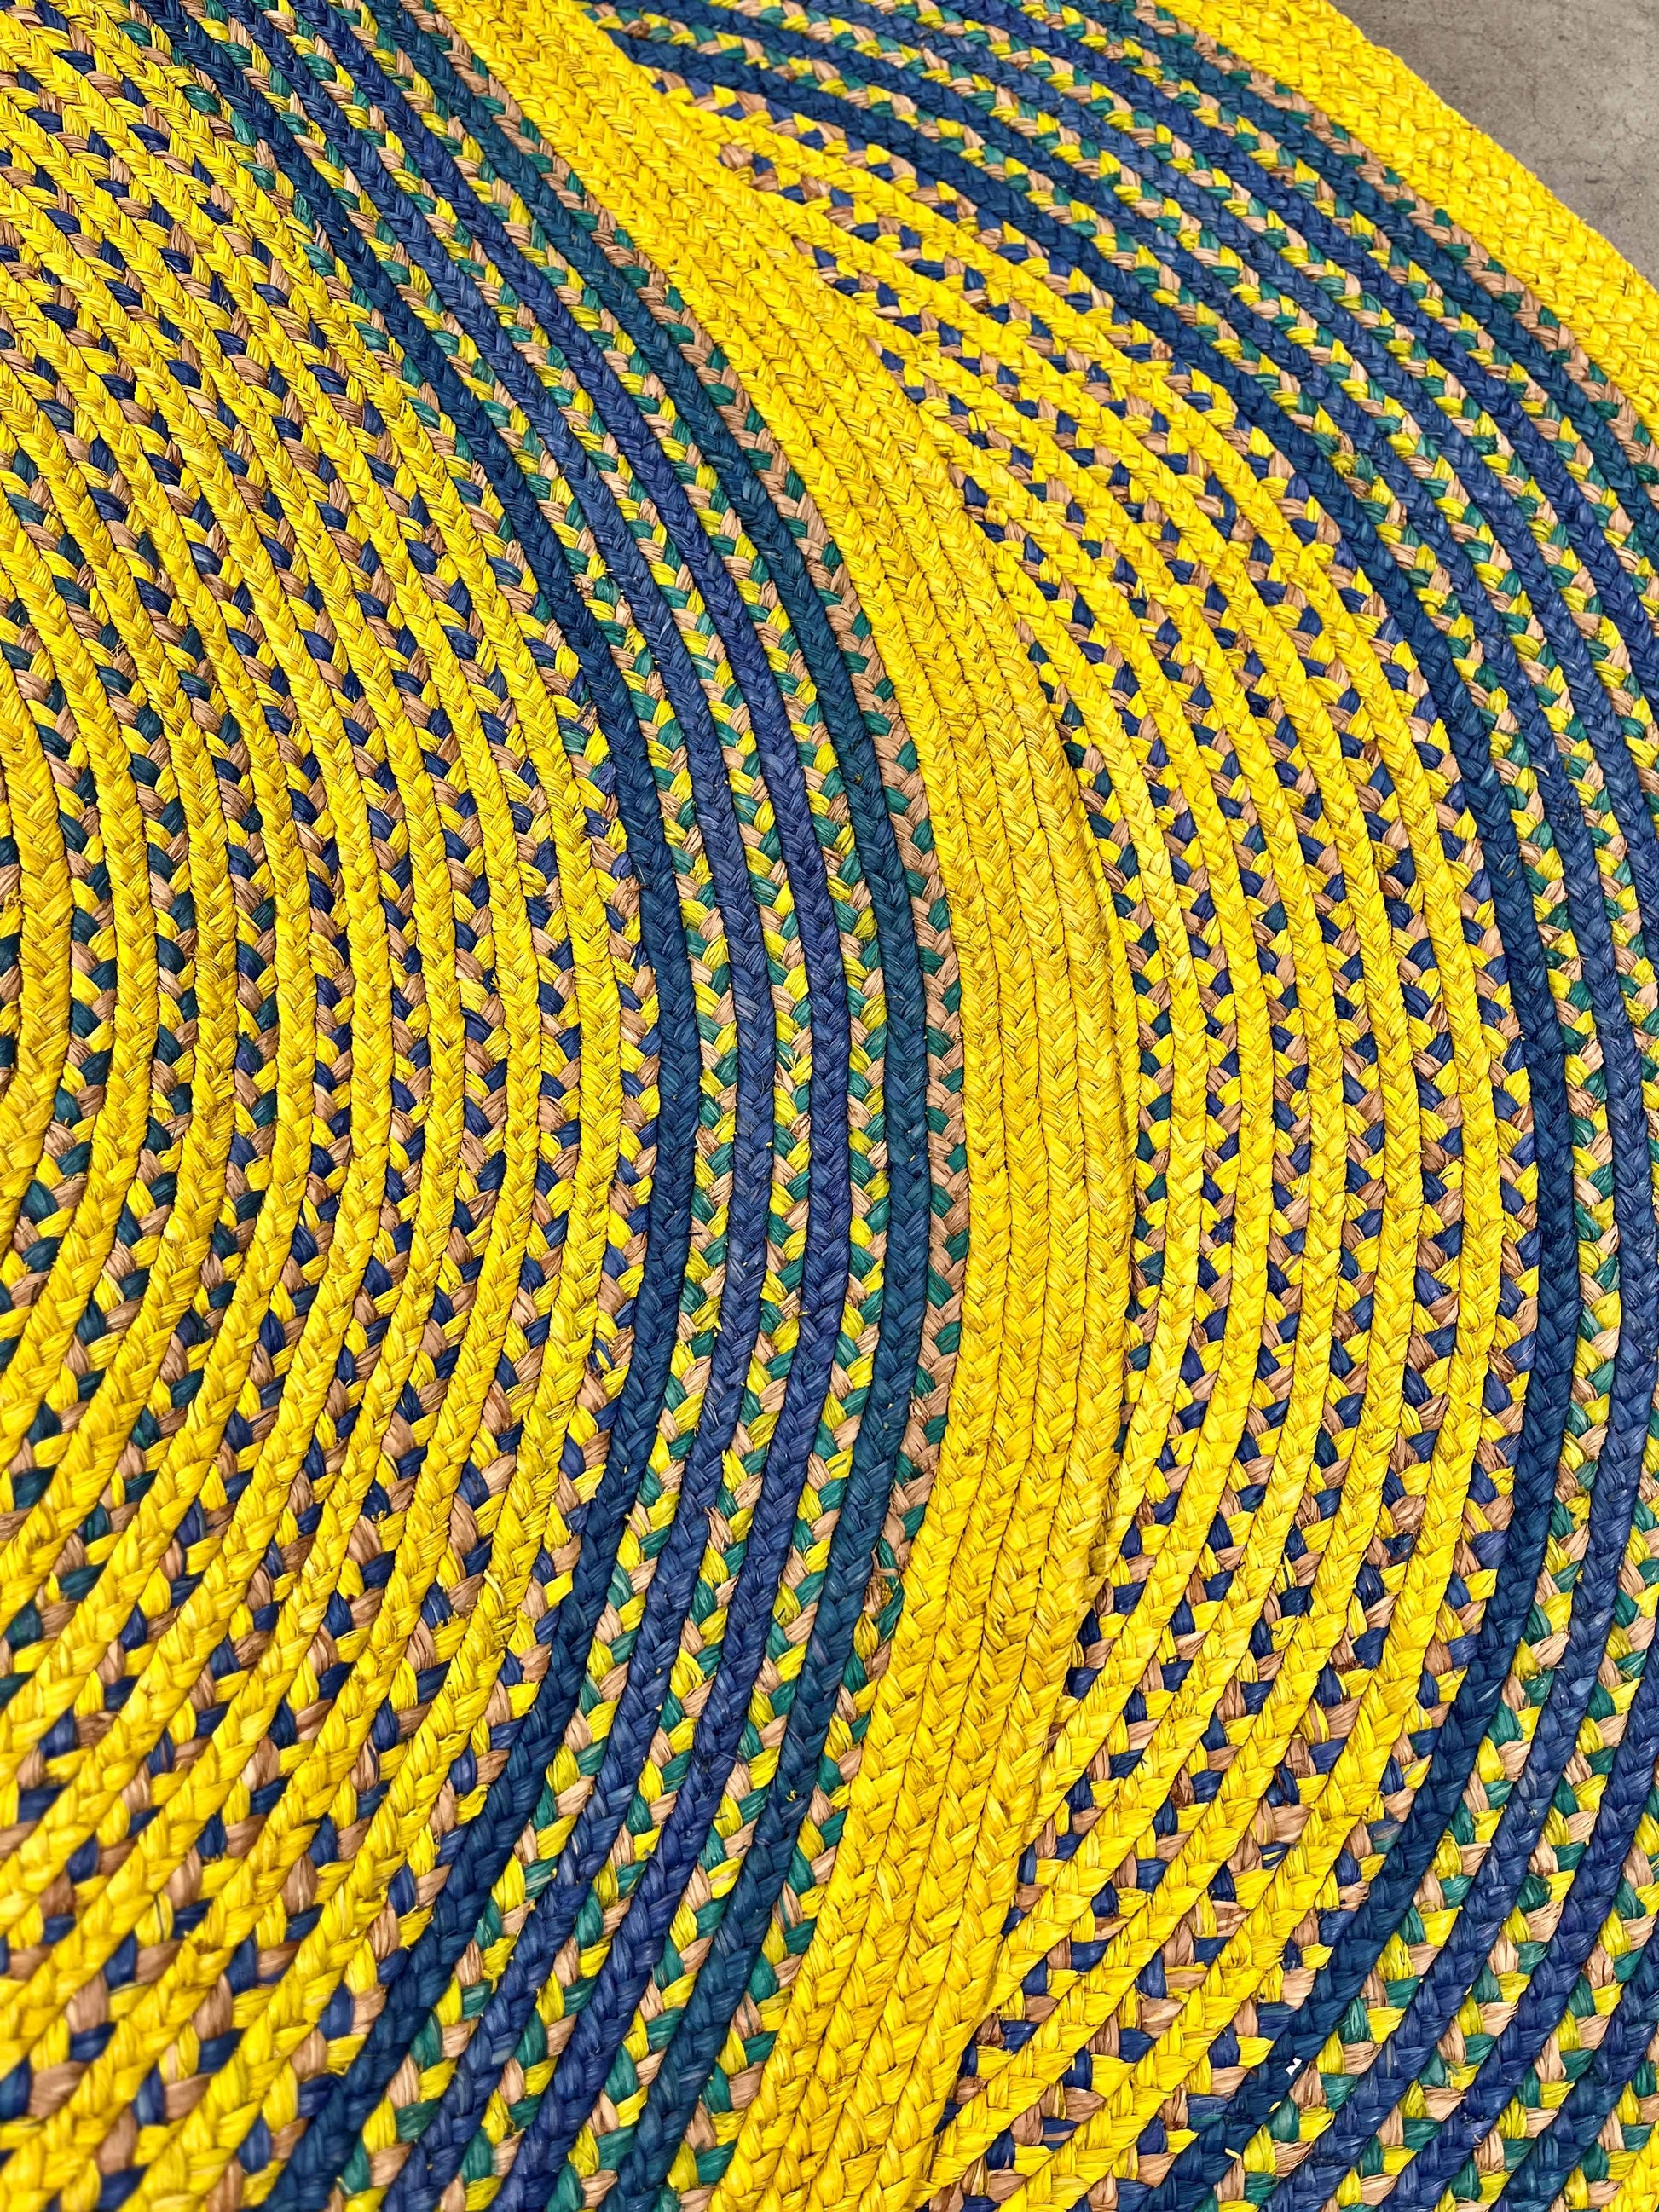 Tapis rond en raphia jaune avec des bandes bleues - Albertine - 170 cm Intimani Ethnique chic